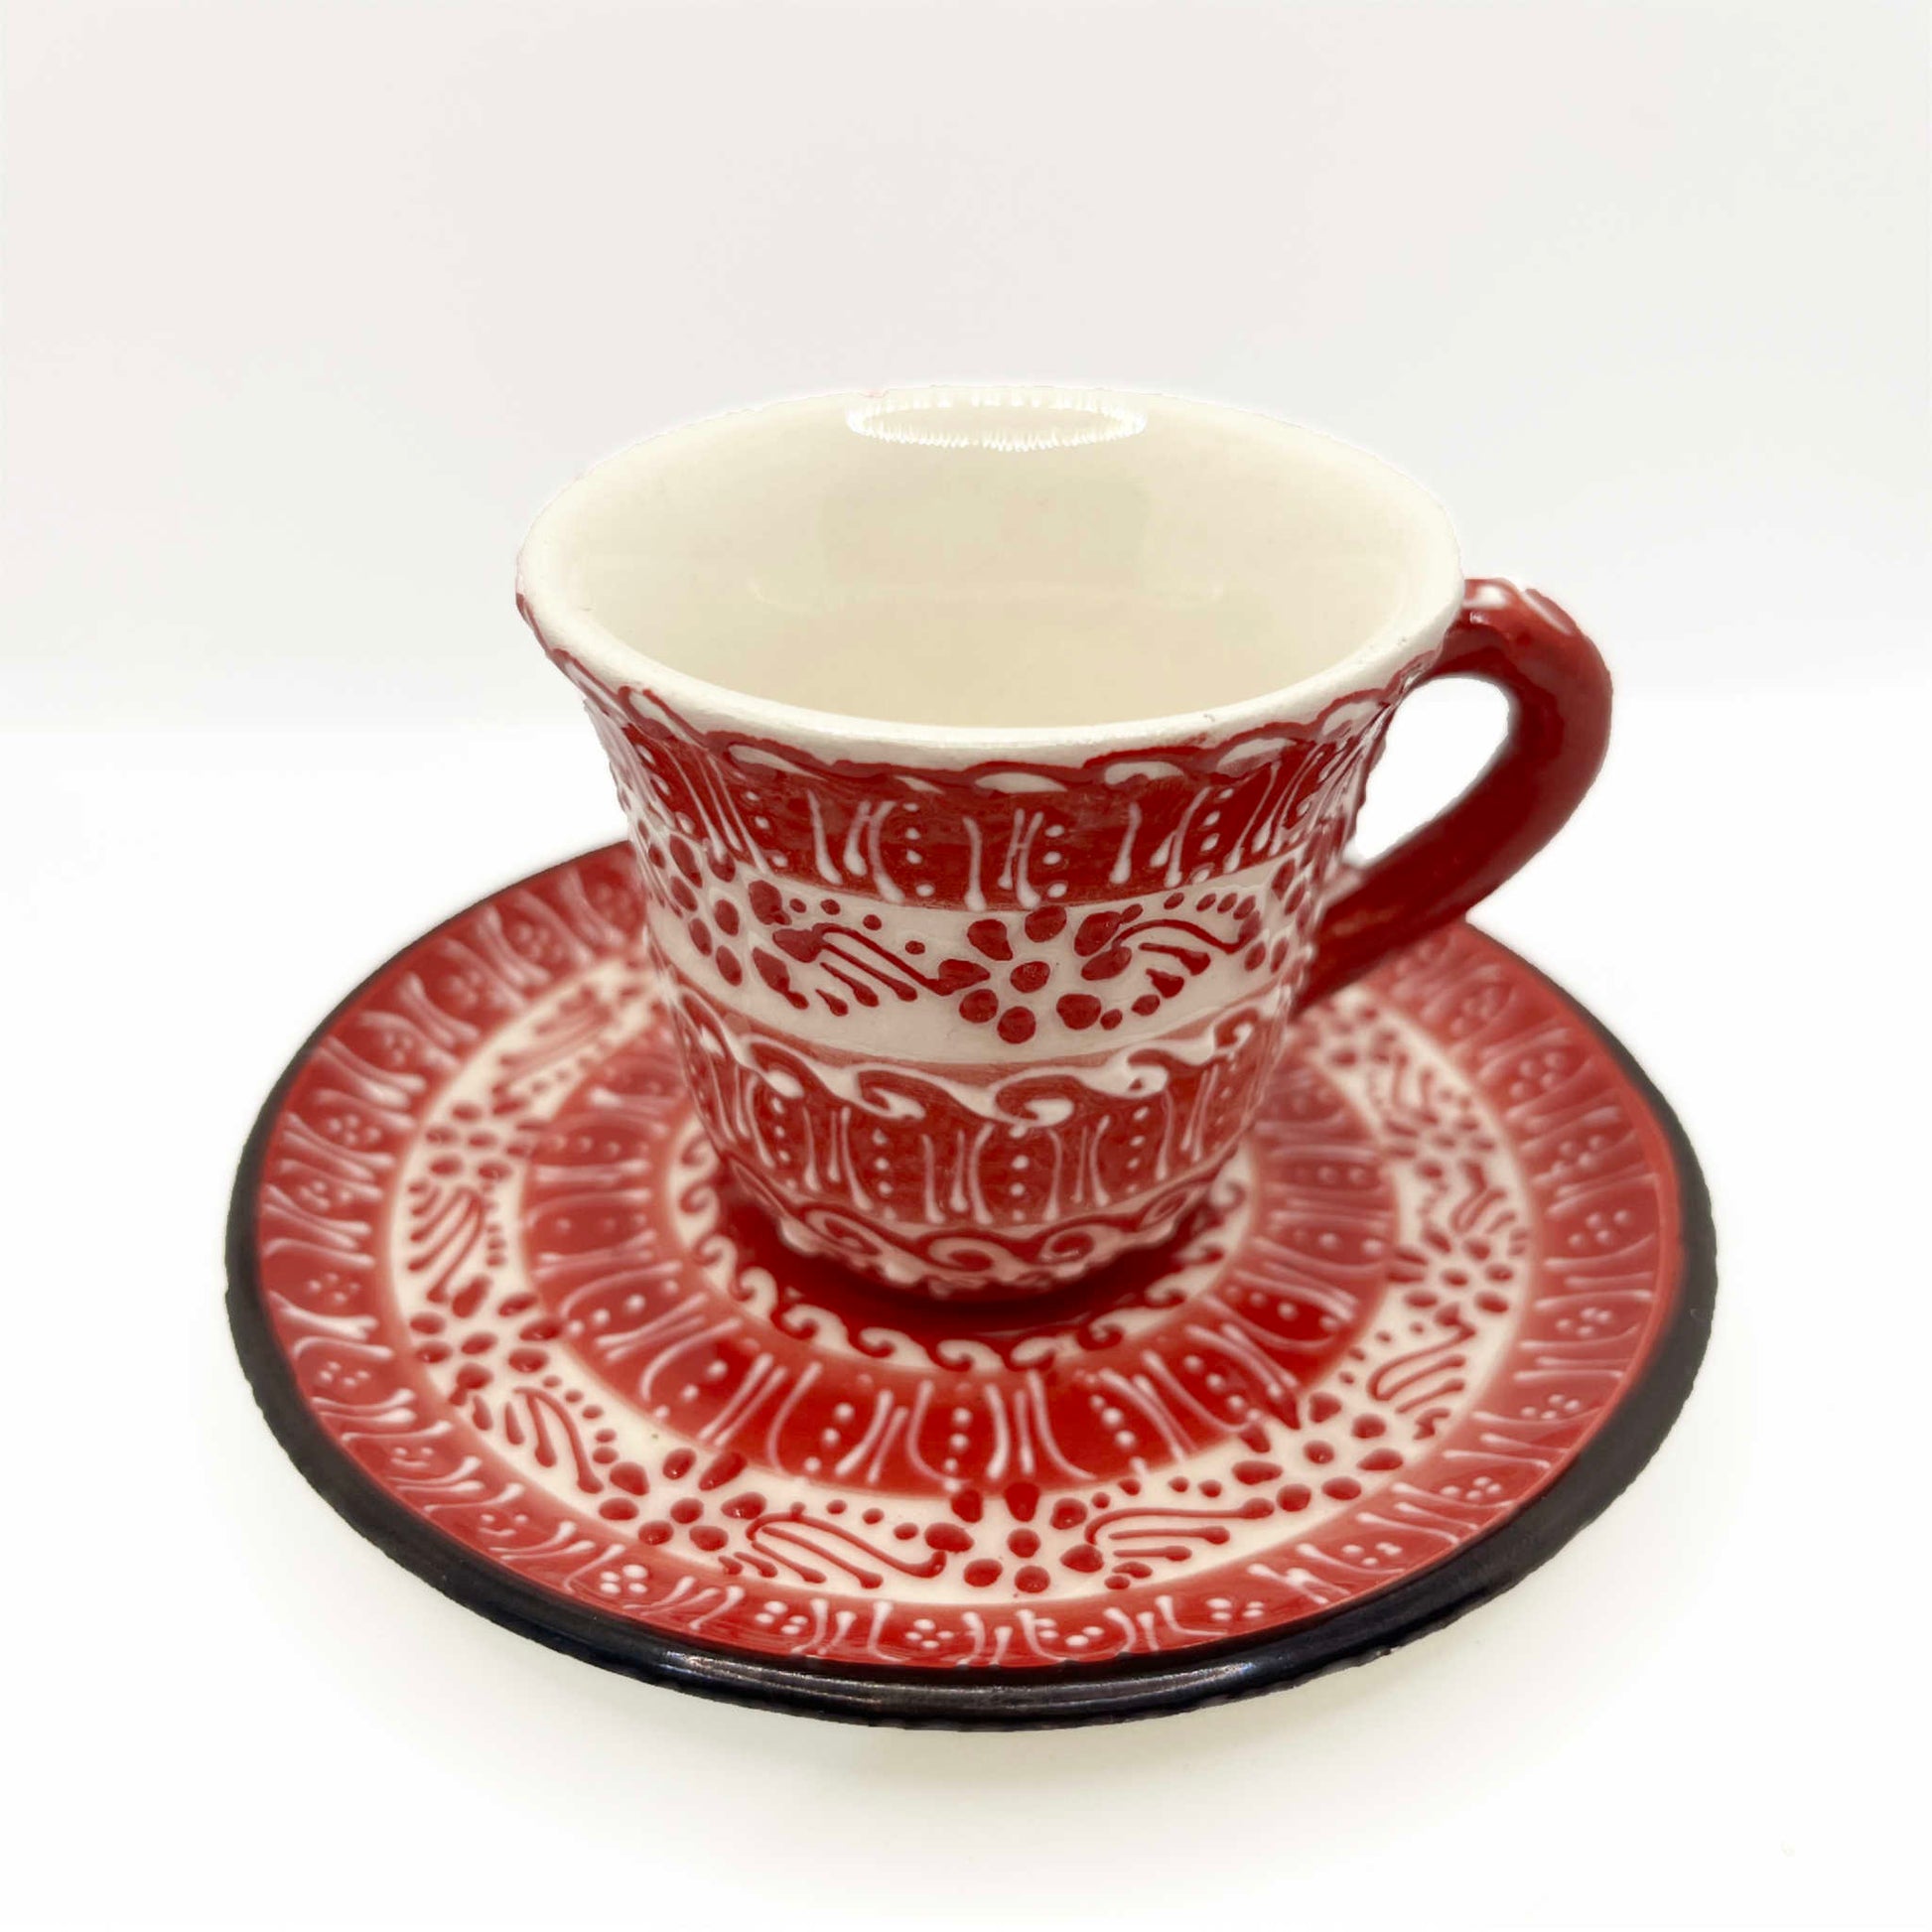 Juego de dos tazas de café cerámica artesanal mesmerise rojo